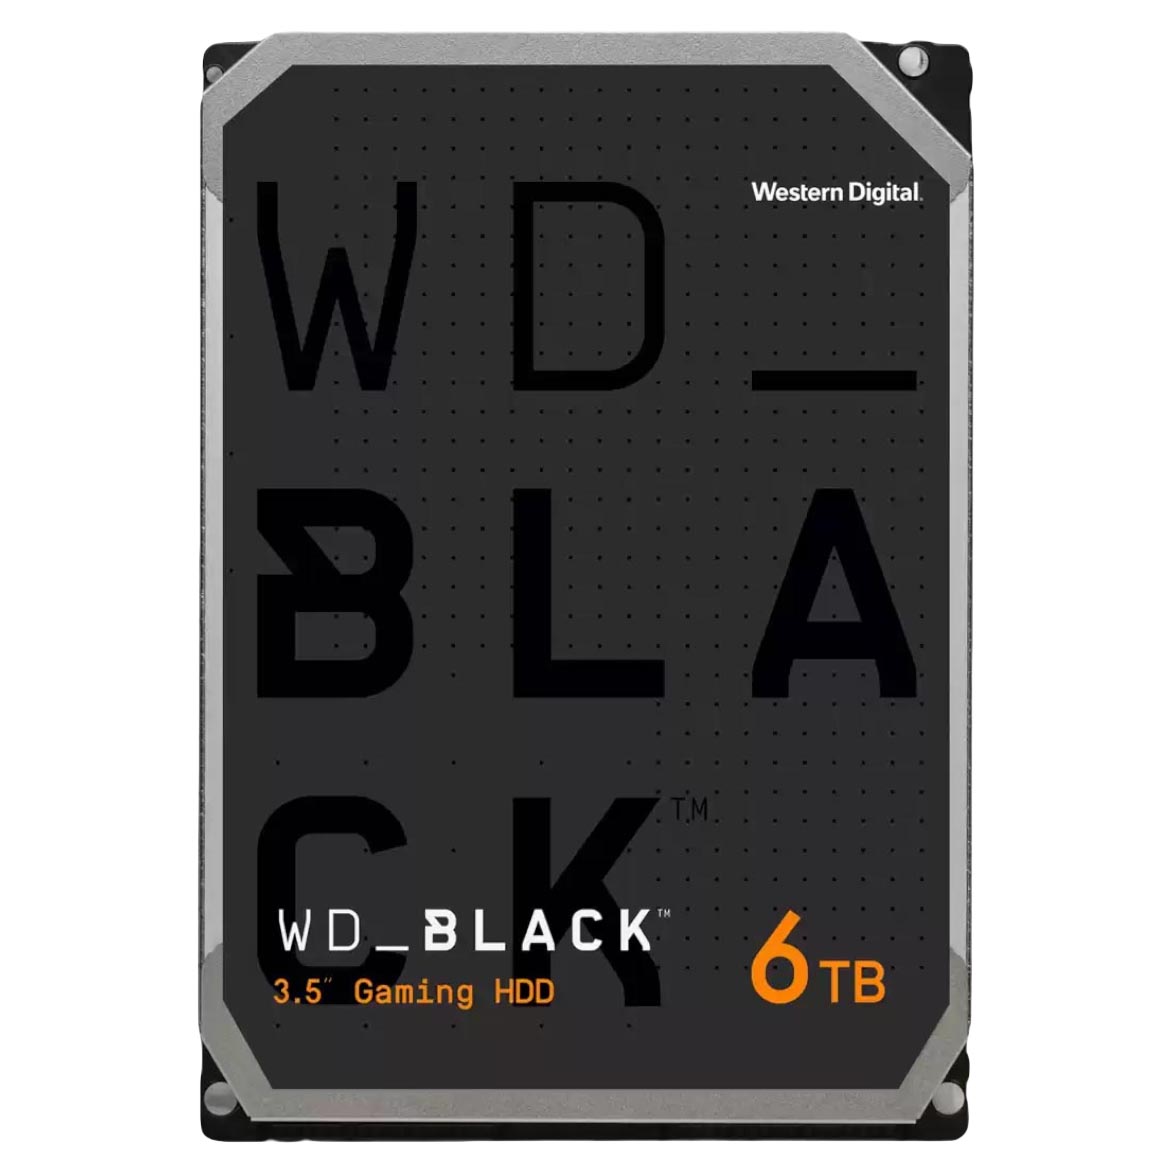 Внутренний жесткий диск Western Digital WD Black Gaming, WD6004FZWX, 6 Тб жесткий диск western digital wd red 6 тб 3 5 wd60efax